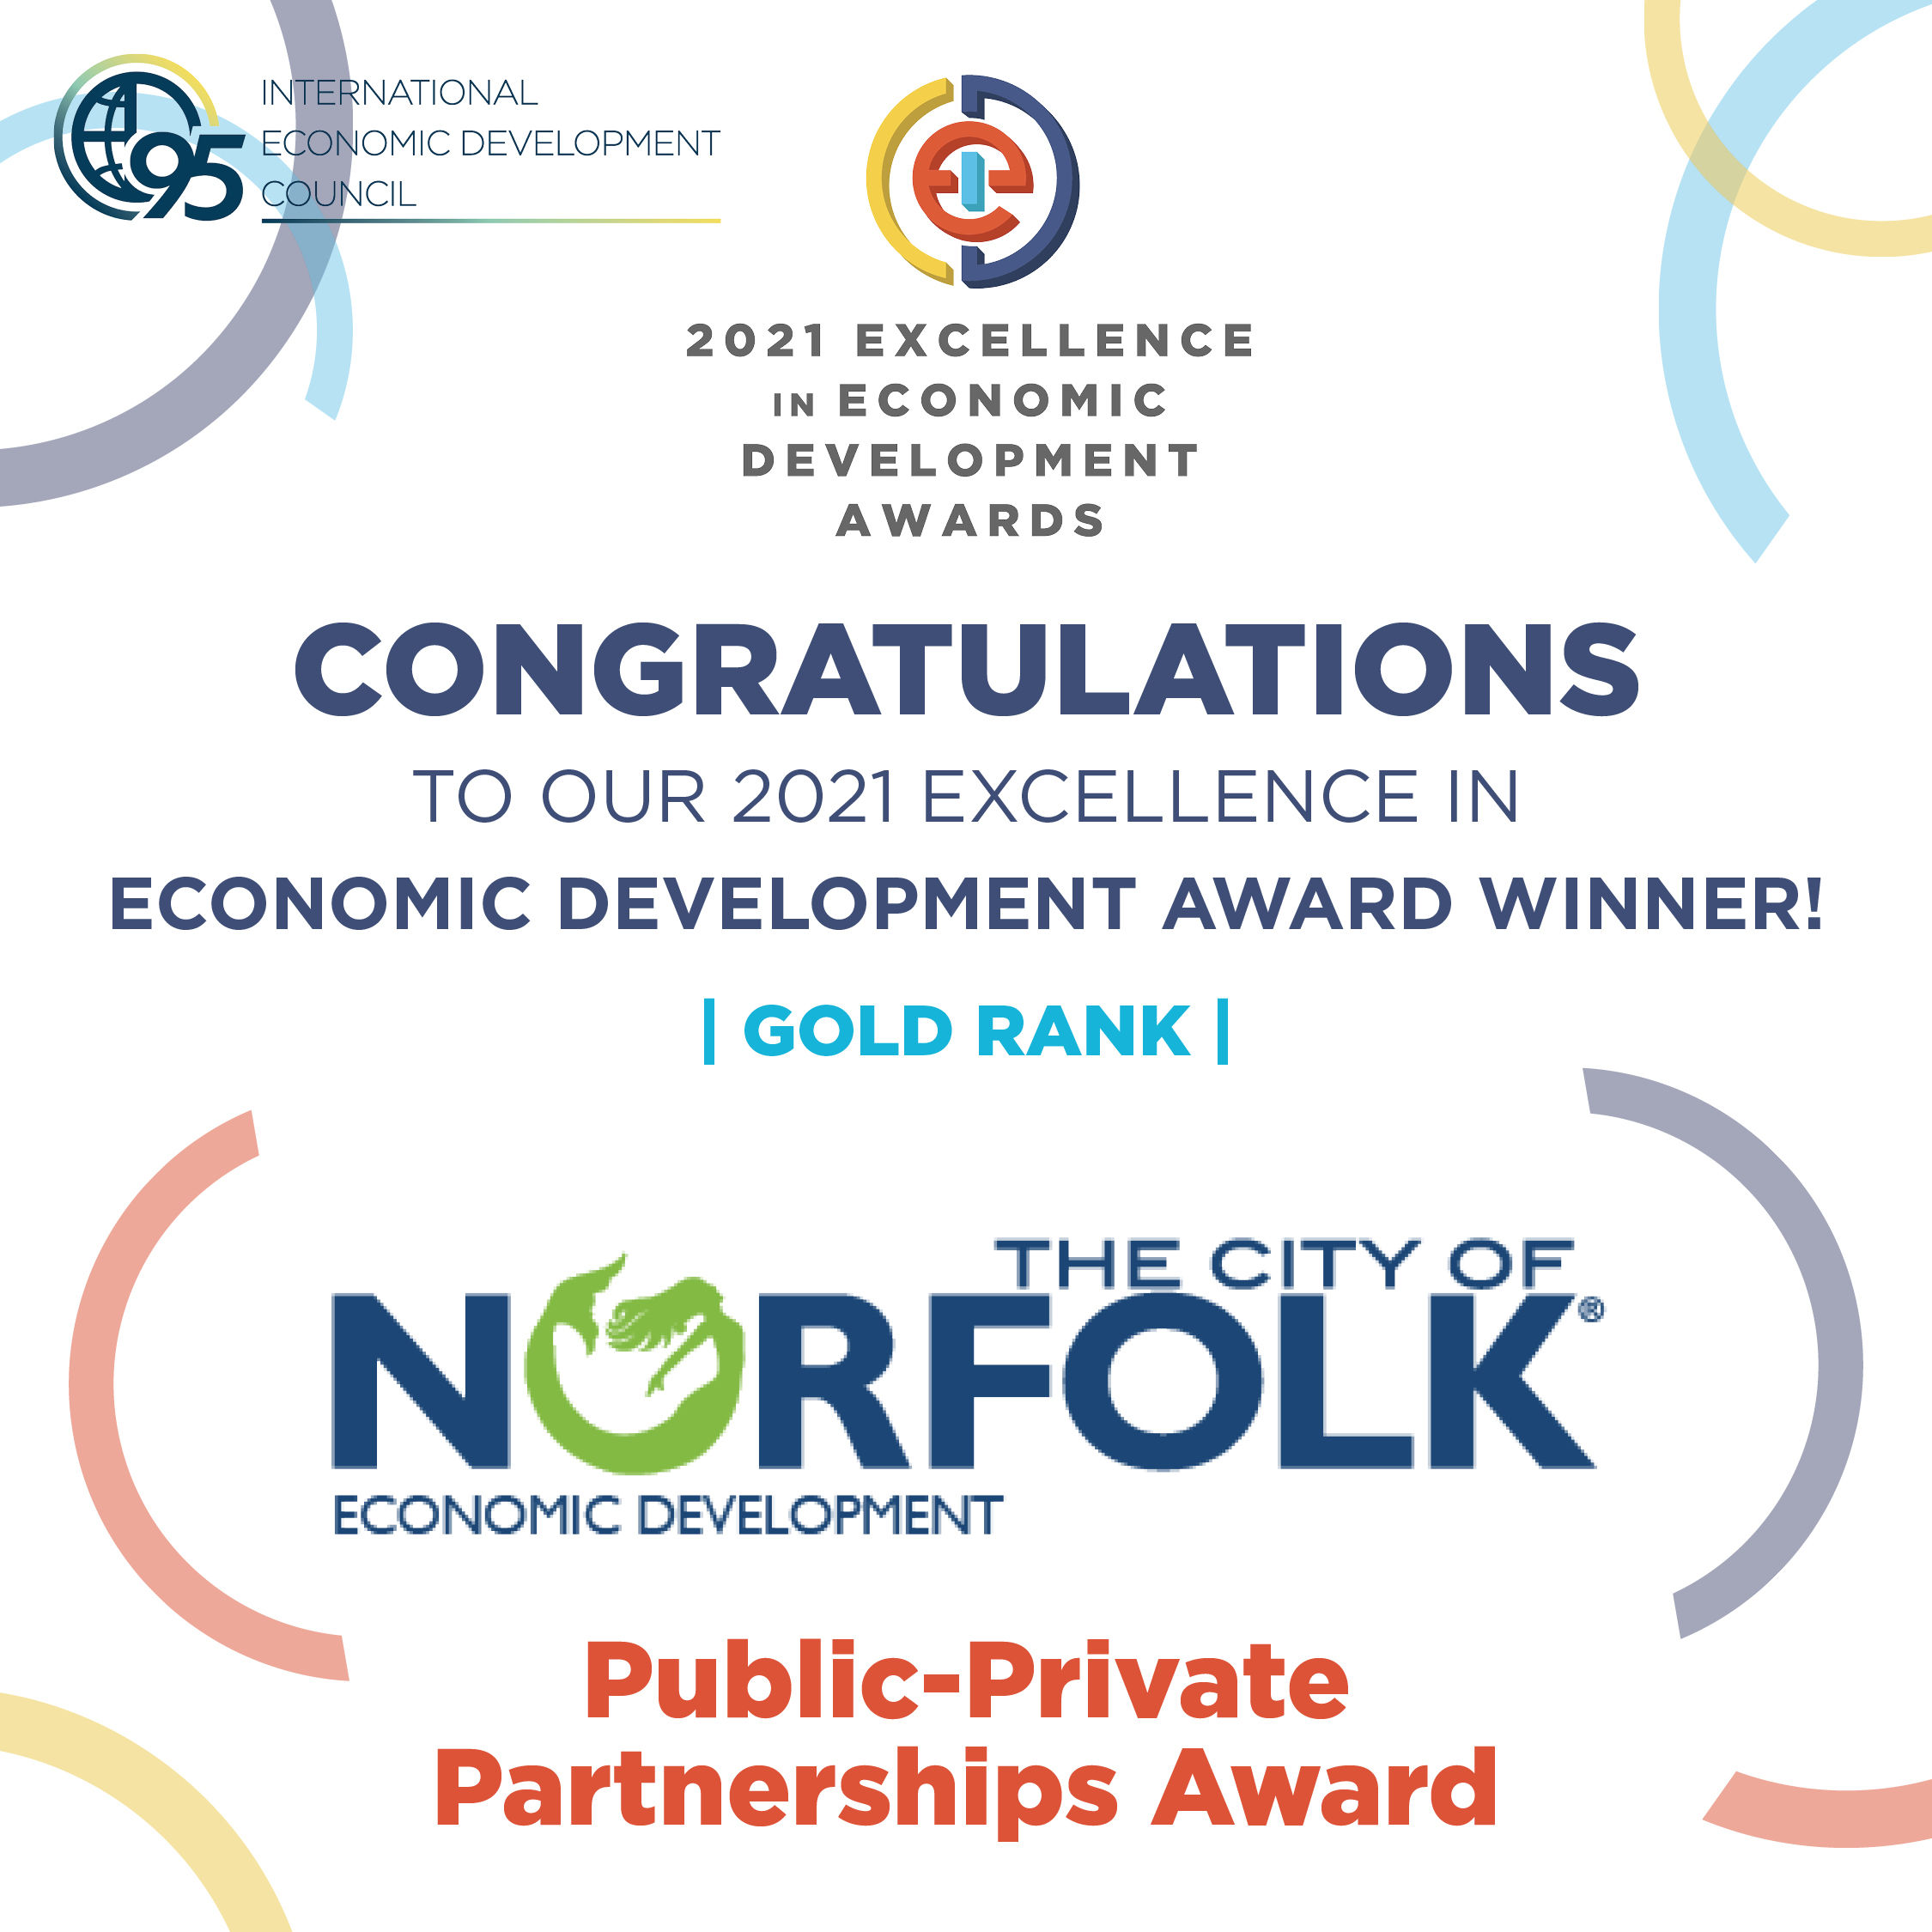 Norfolk Economic Development Department Receives Excellence in Economic Development Award from the International Economic Development Council